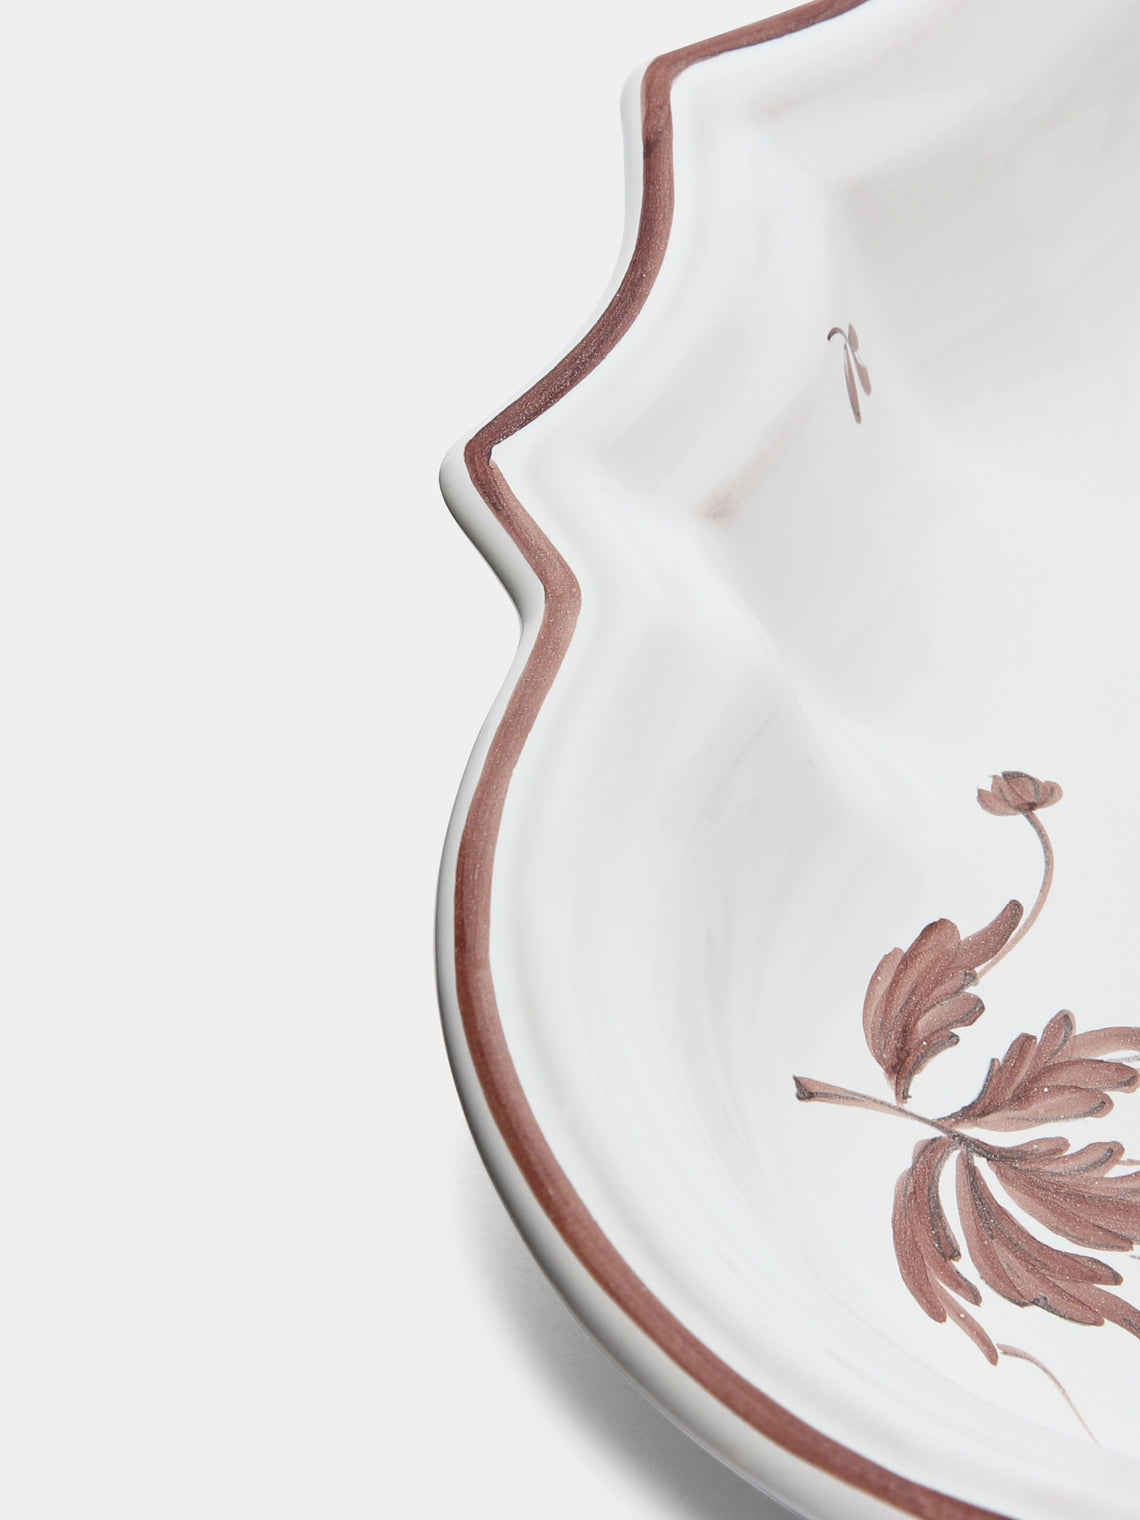 Z.d.G - Camaïeu Hand-Painted Ceramic Medium Serving Dish - Brown - ABASK